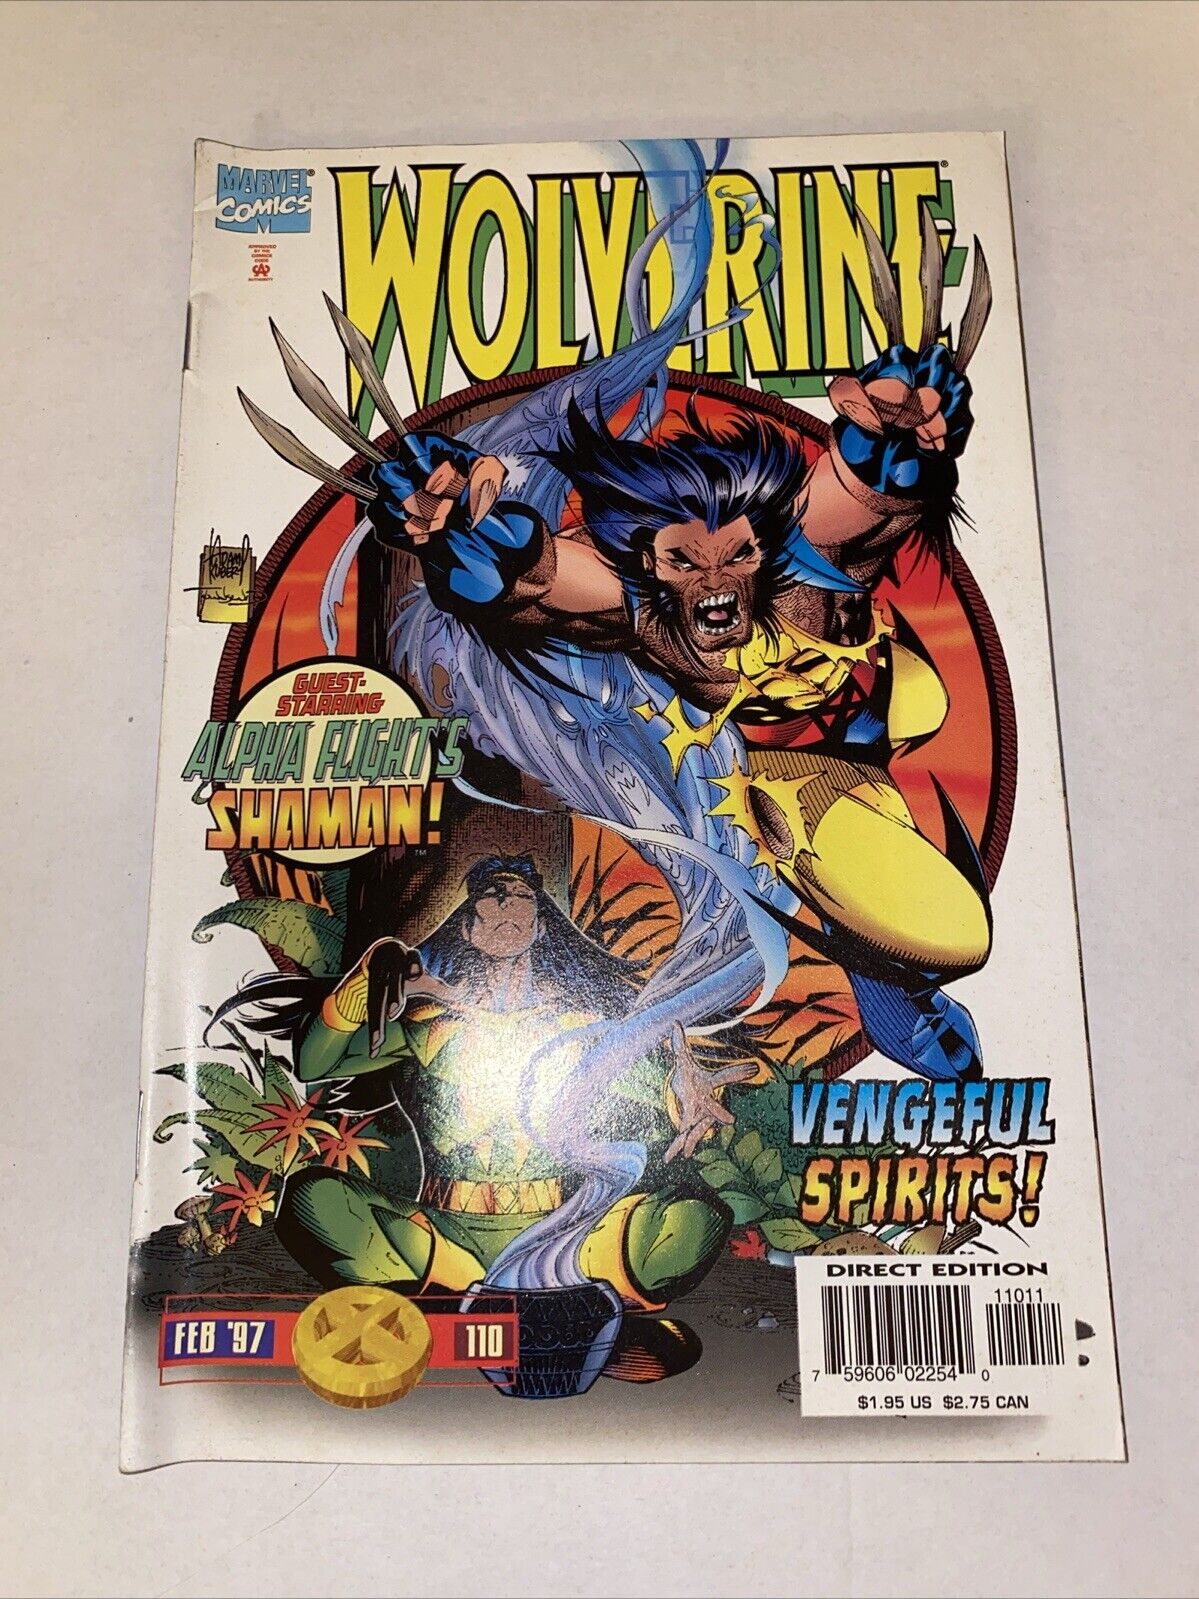 Wolverine #110 By Hama Bennett Shaman Alpha Flight Kubert Cover